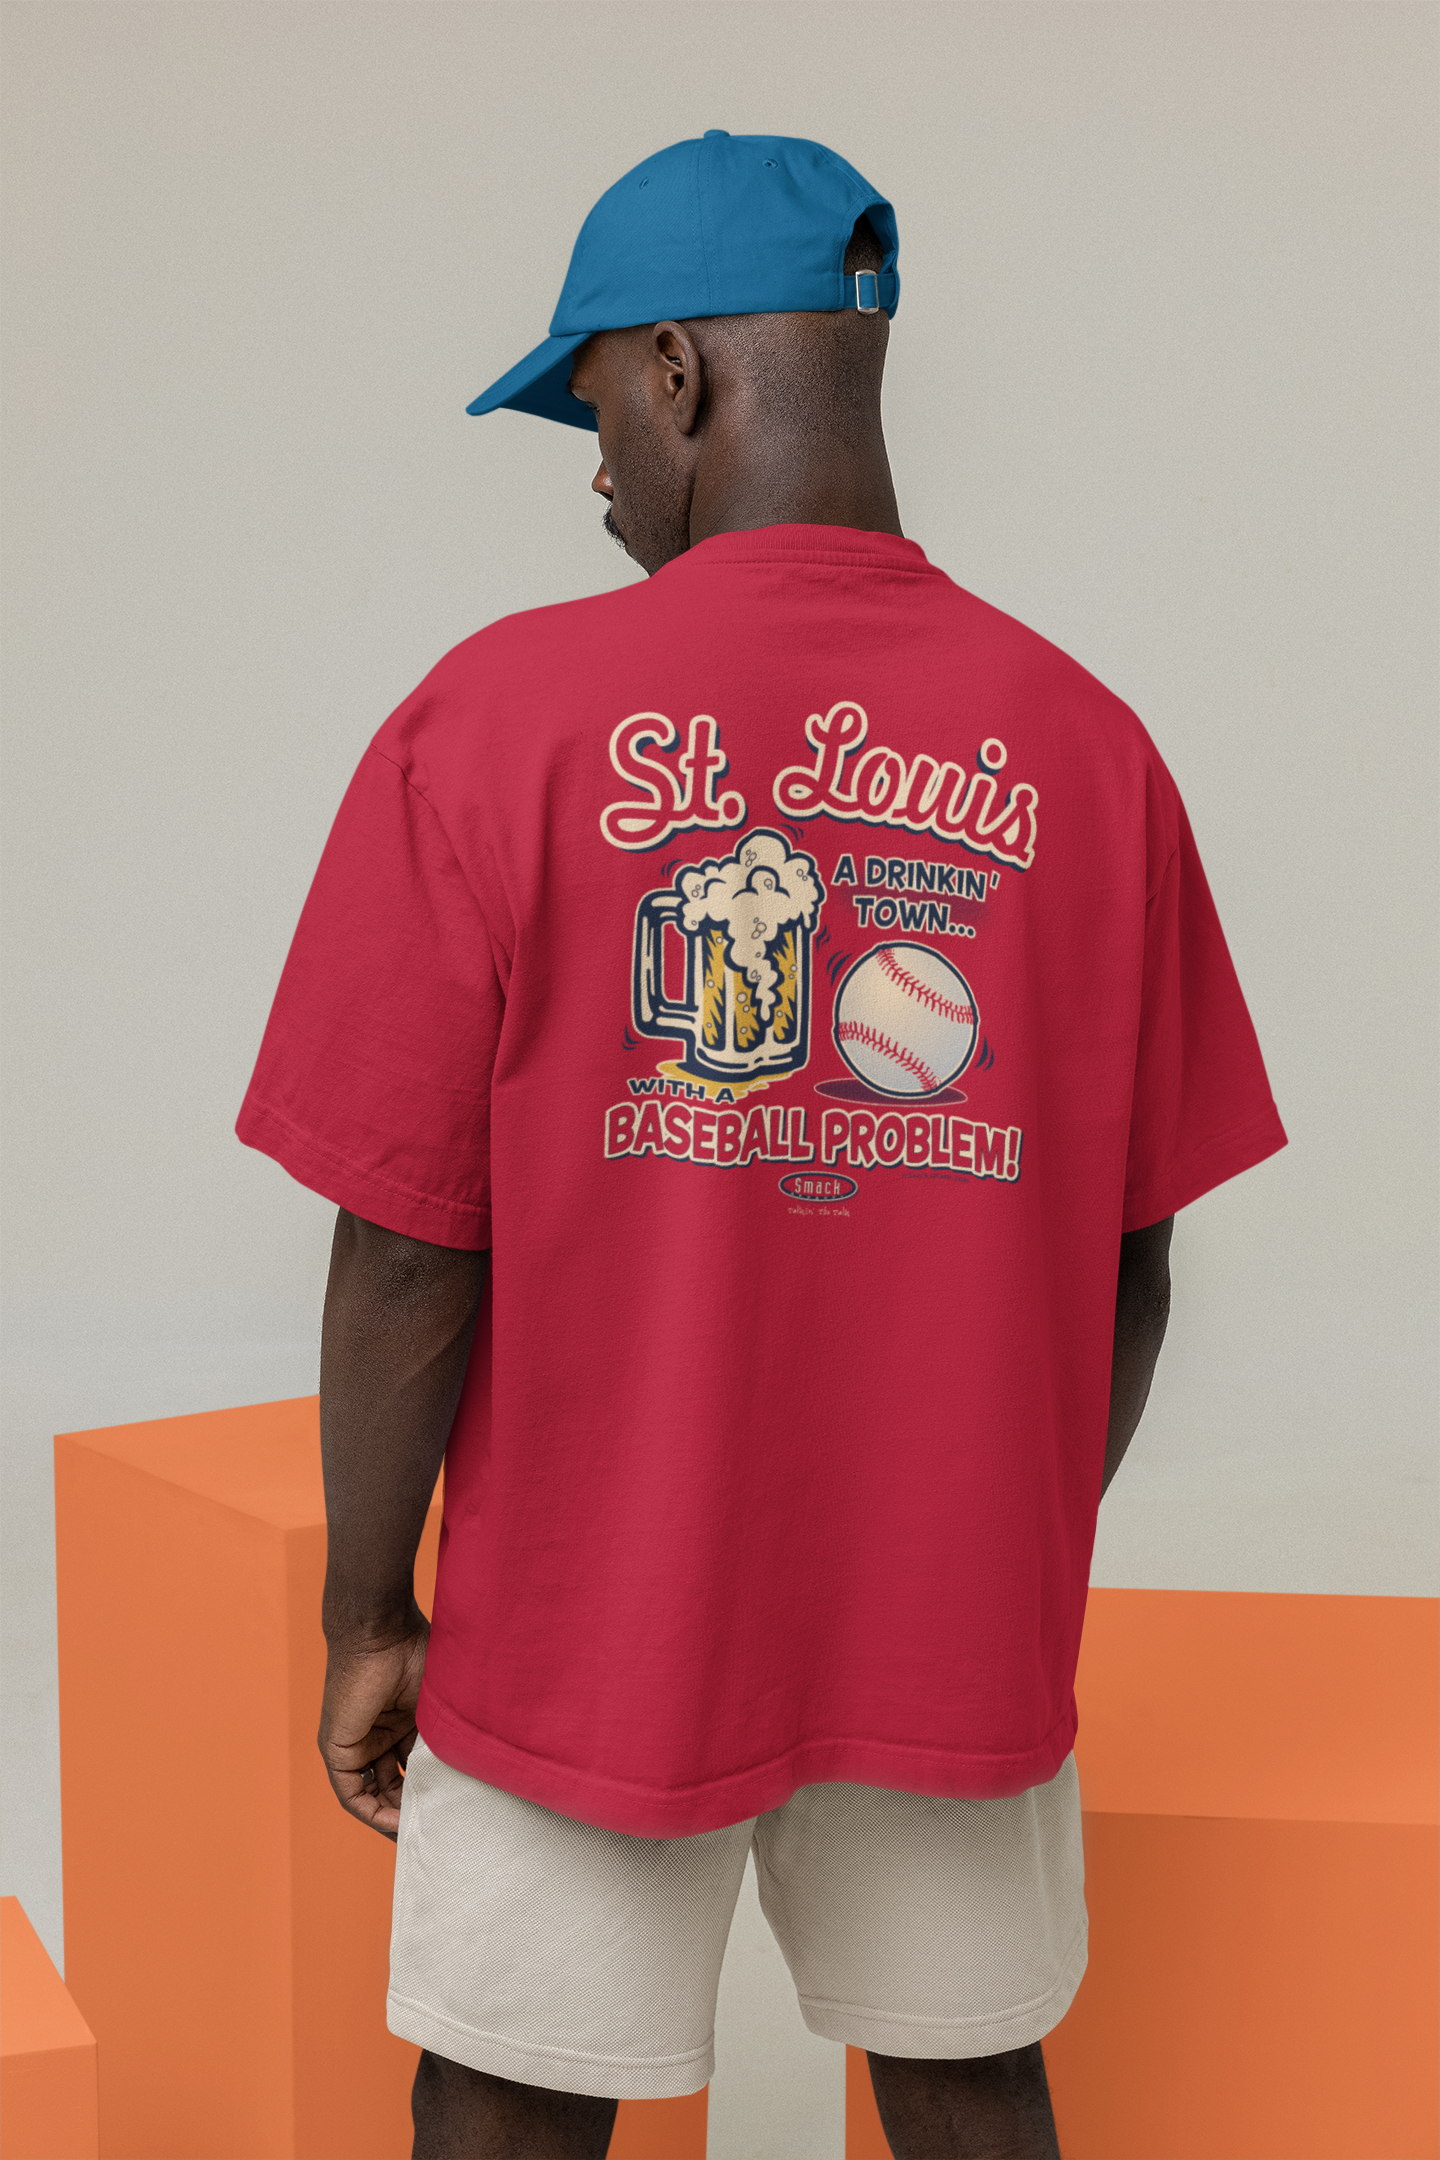 St. Louis Stars Baseball shirt t-shirt by Matthewteeshirts - Issuu